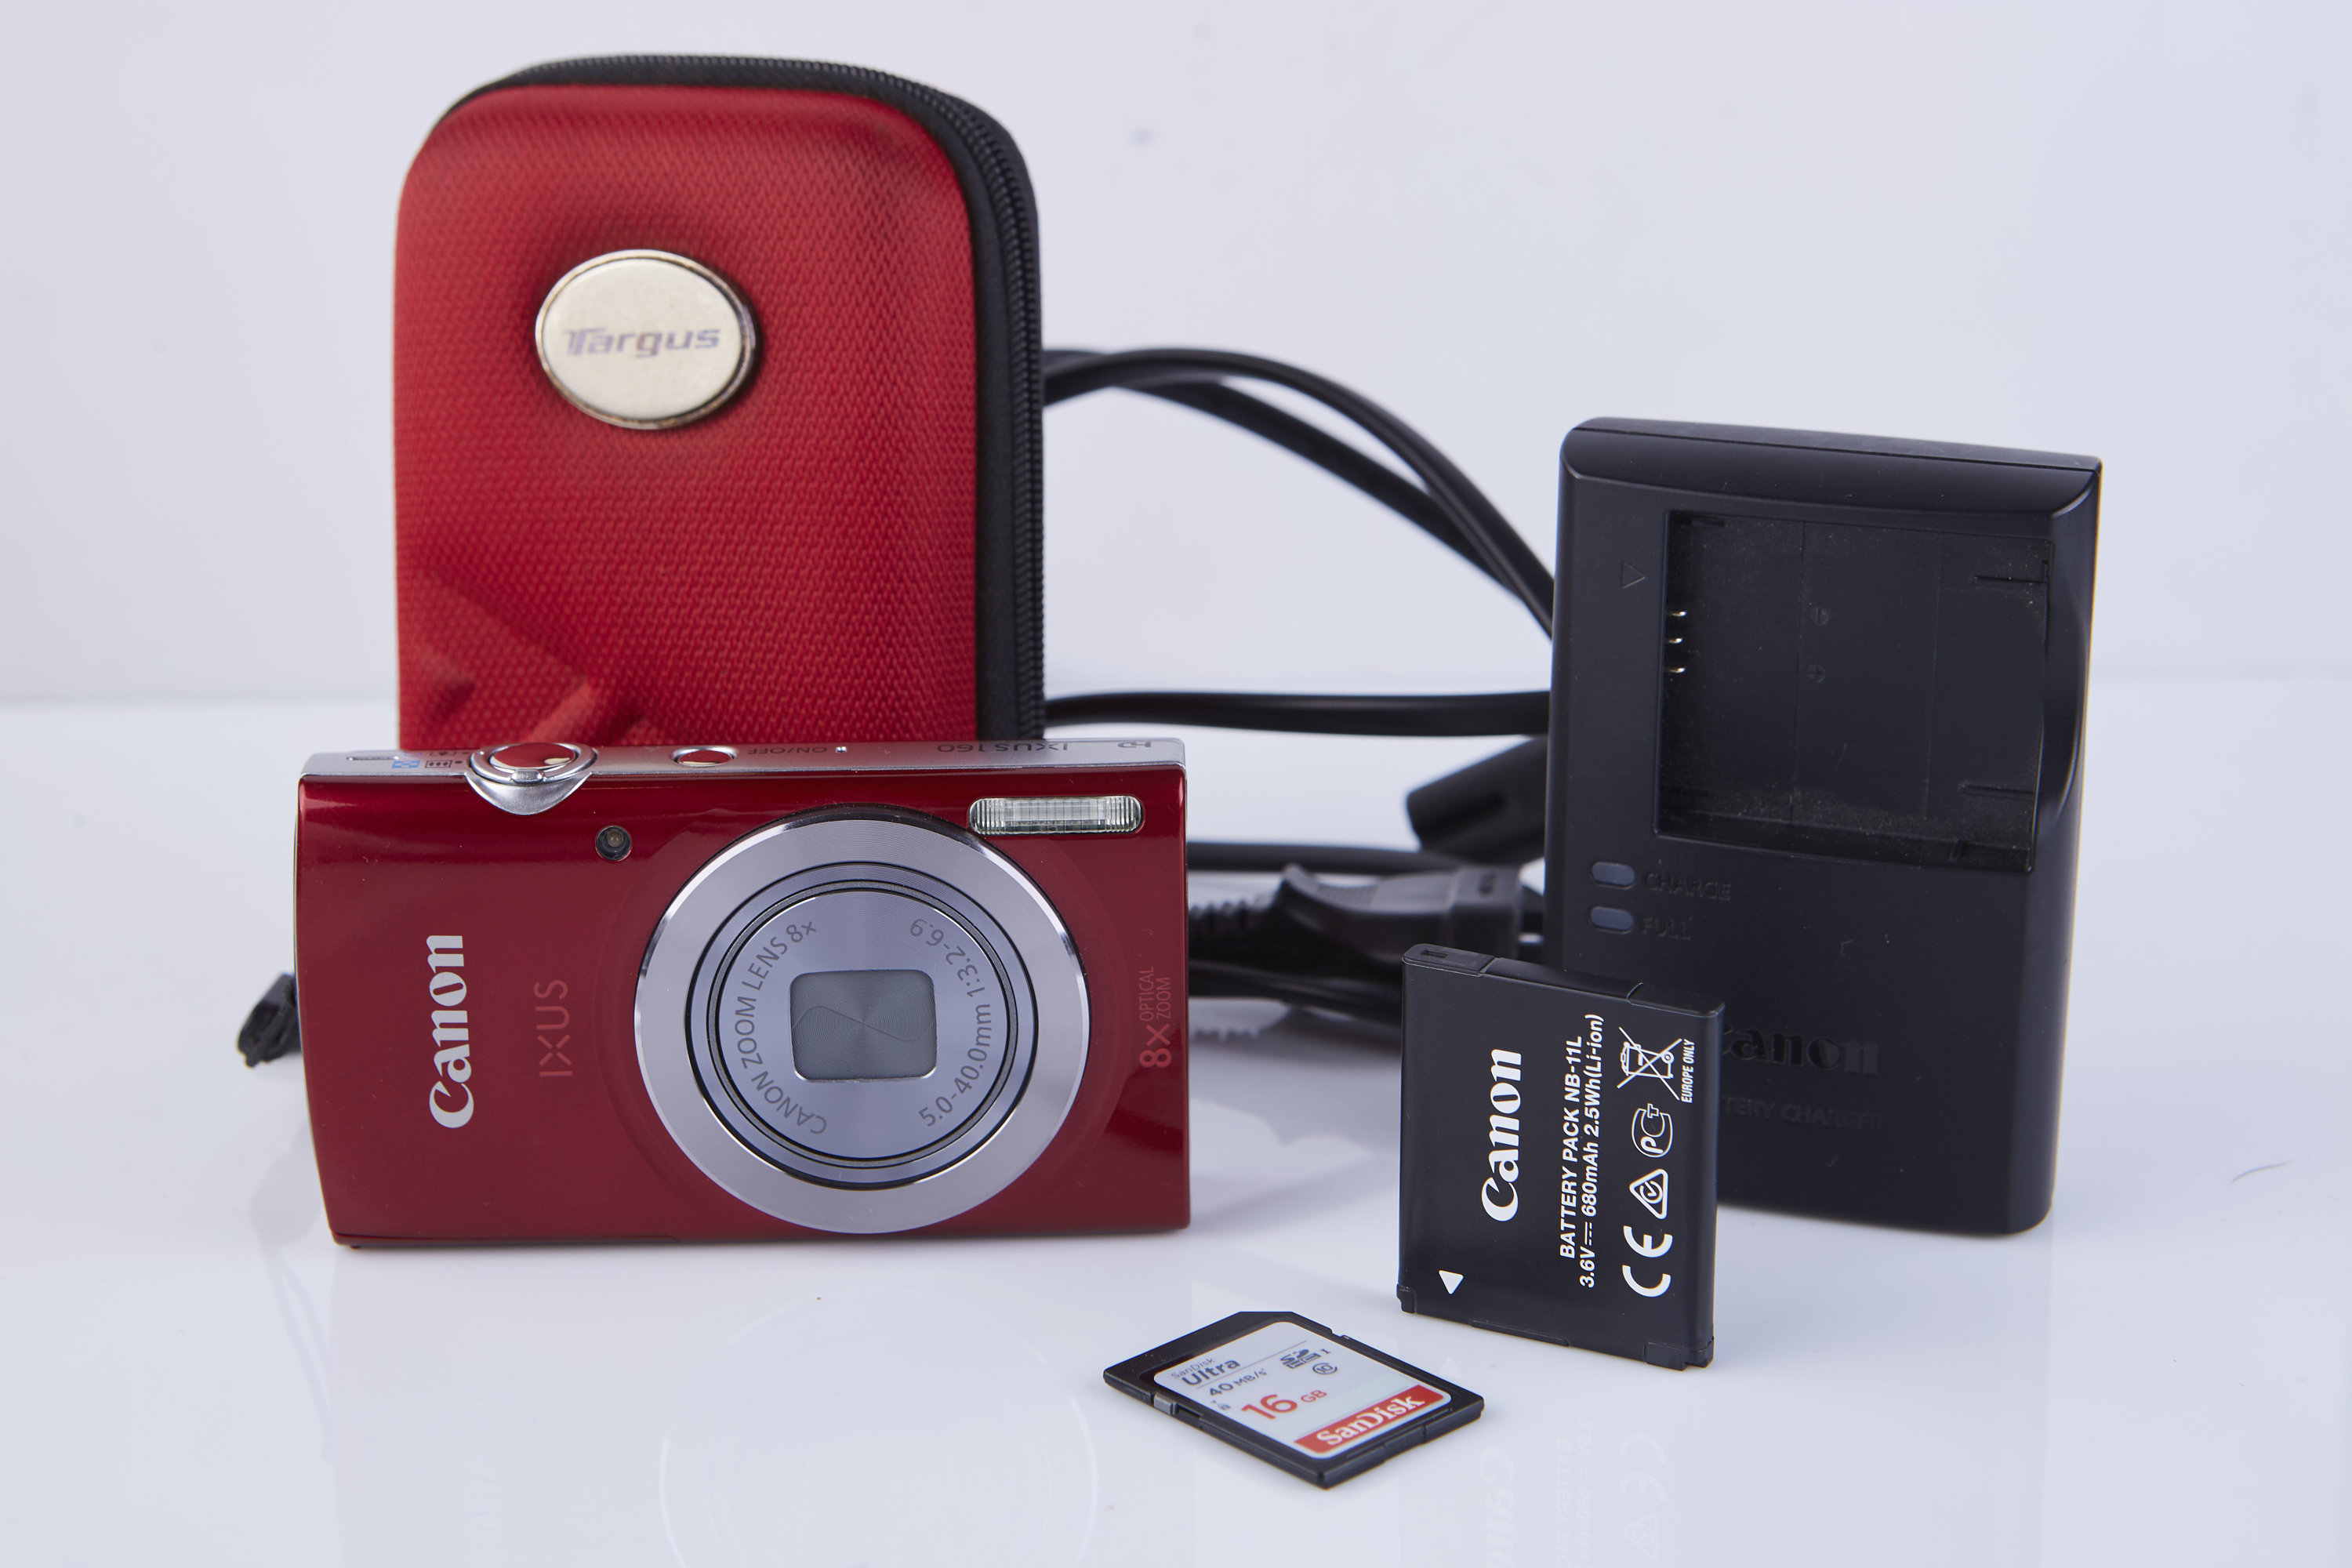 Canon IXUS 170 - PowerShot and IXUS digital compact cameras - Canon Europe